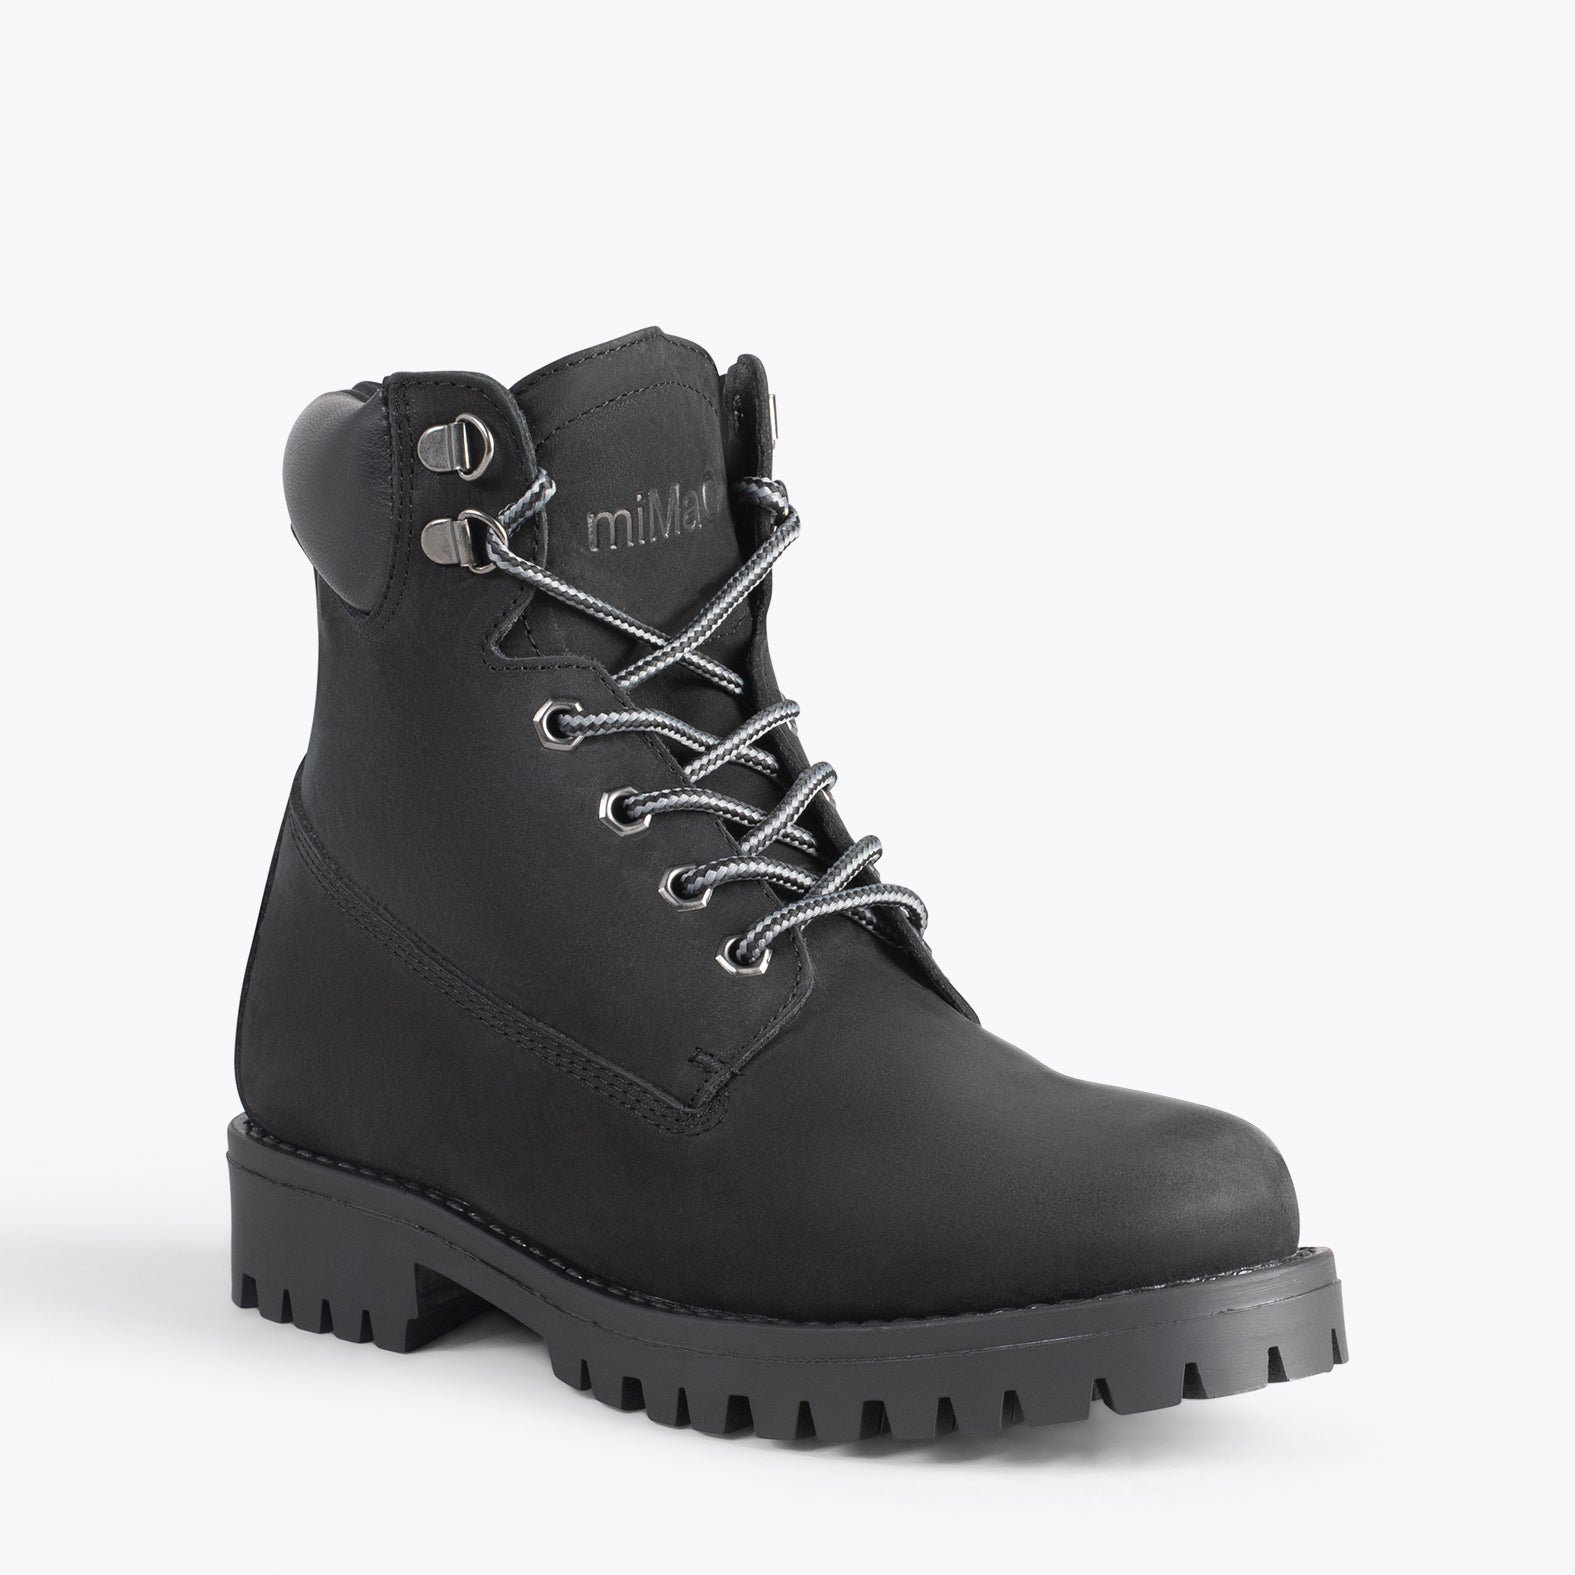 AVIATOR – BLACK mountain style boots